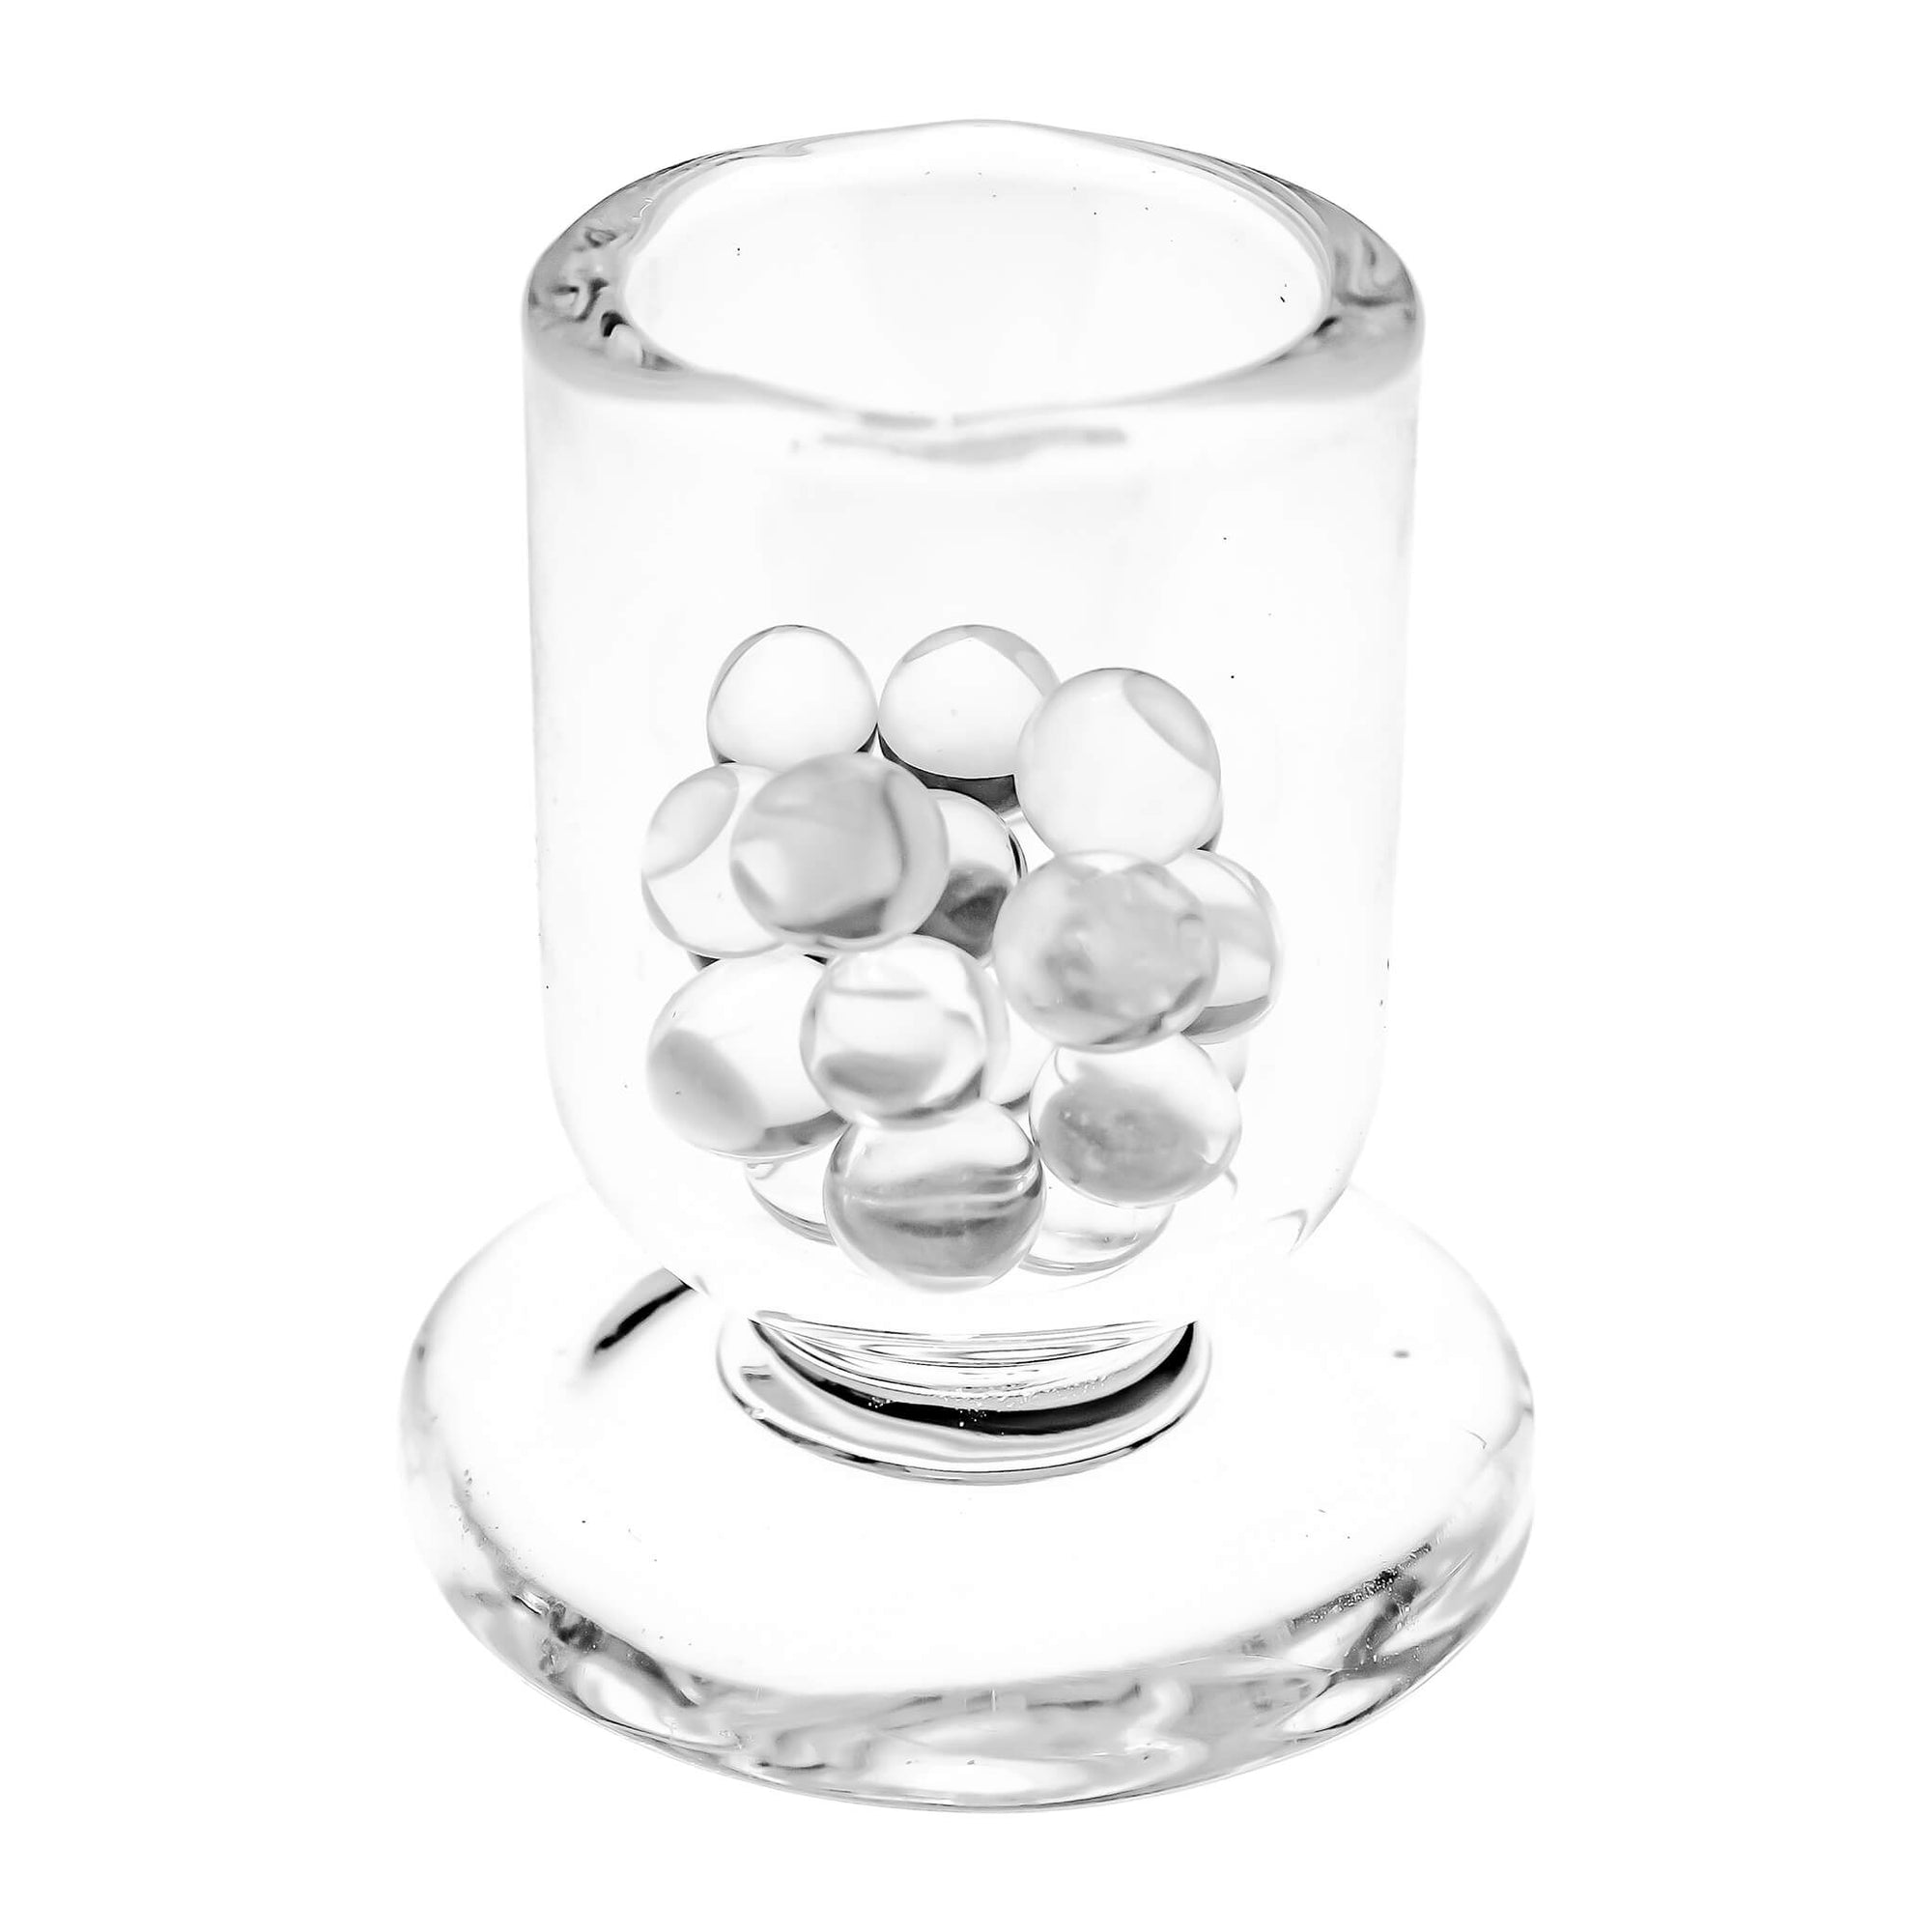 6mm Terp (Dab) Pearls-Quartz | Quartz Terp Pearls In Cup View | Dabbing Warehouse